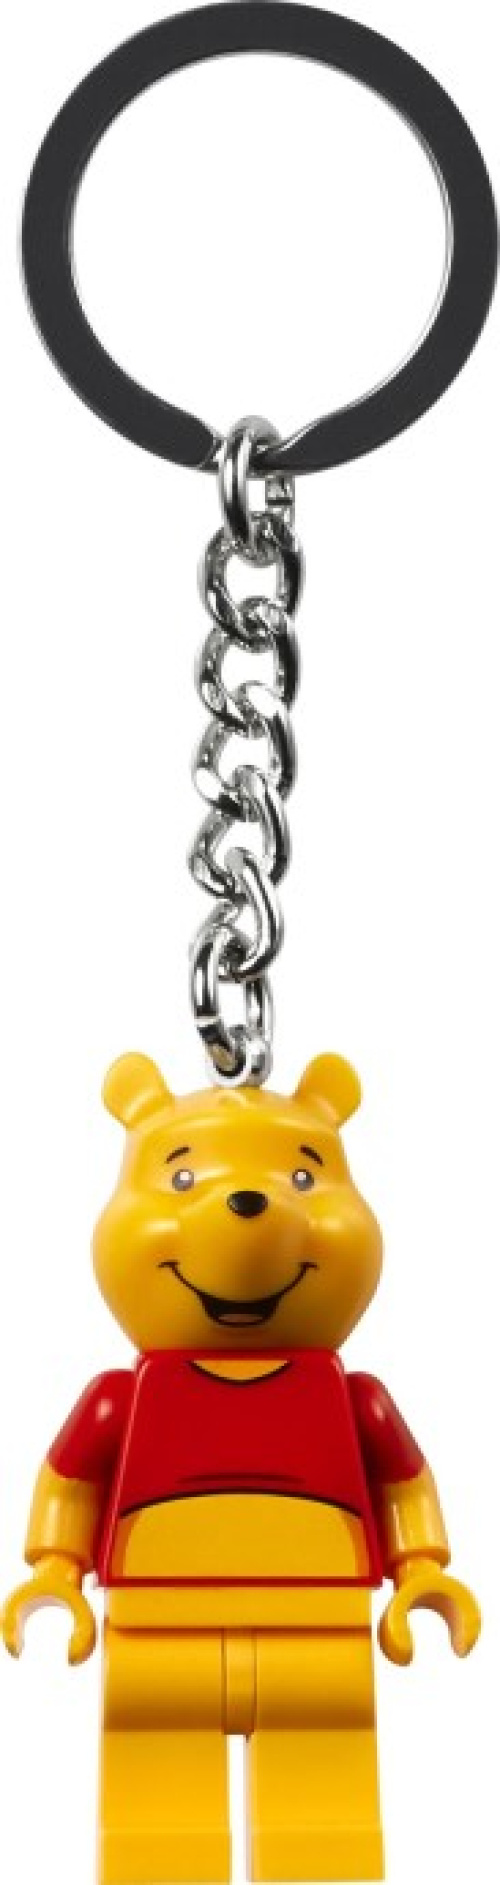 854191-1 Winnie the Pooh Key Chain